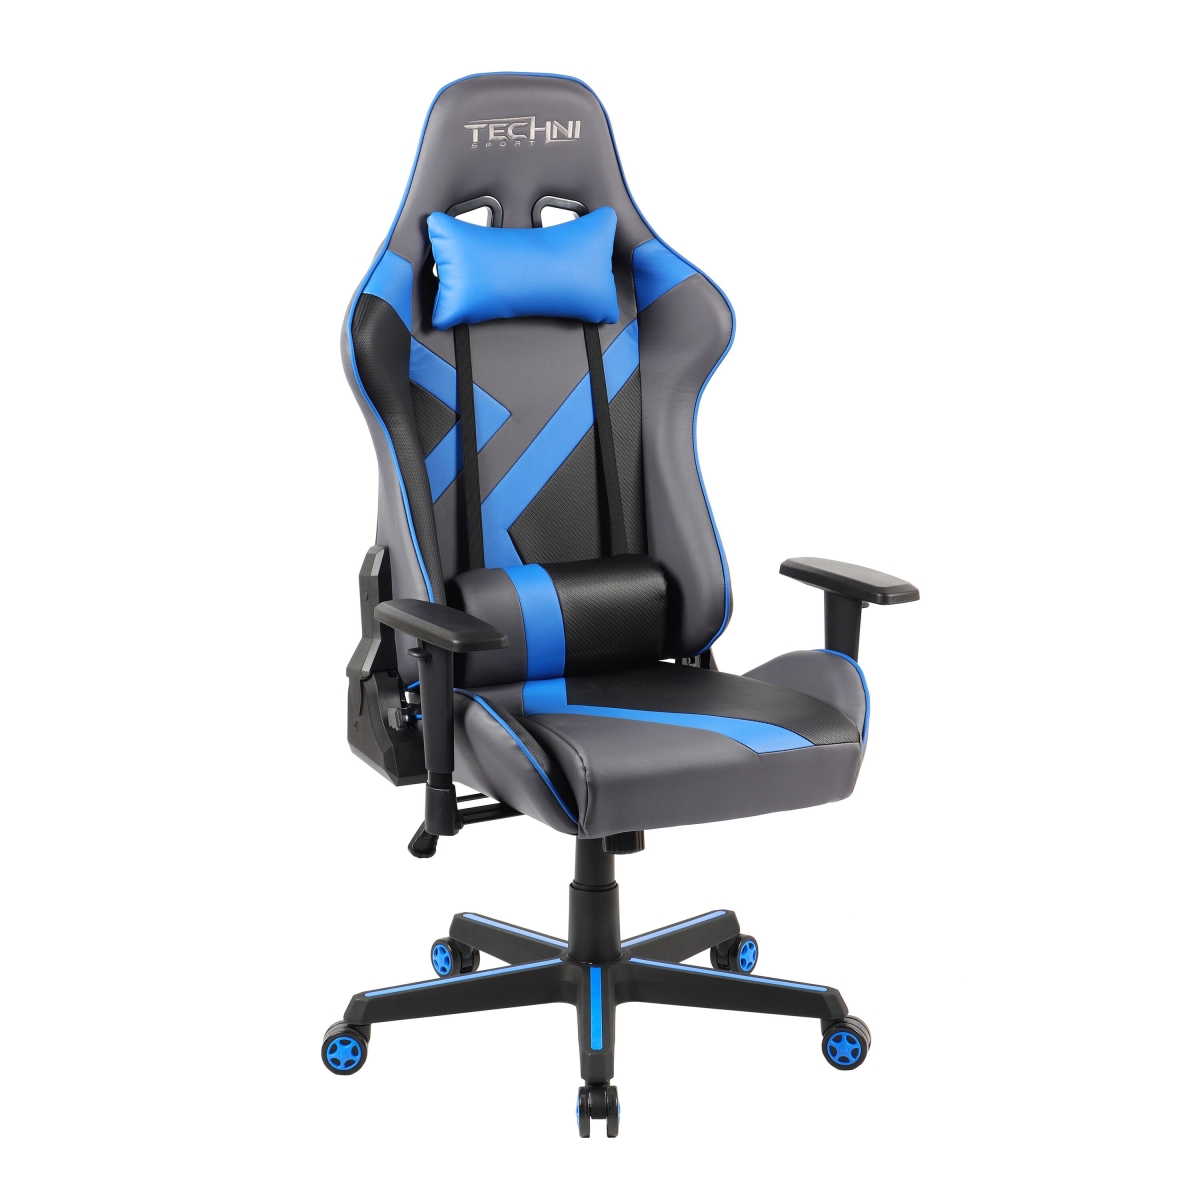 Rta-ts70-bl Ts-70 Office-pc Gaming Chair, Blue